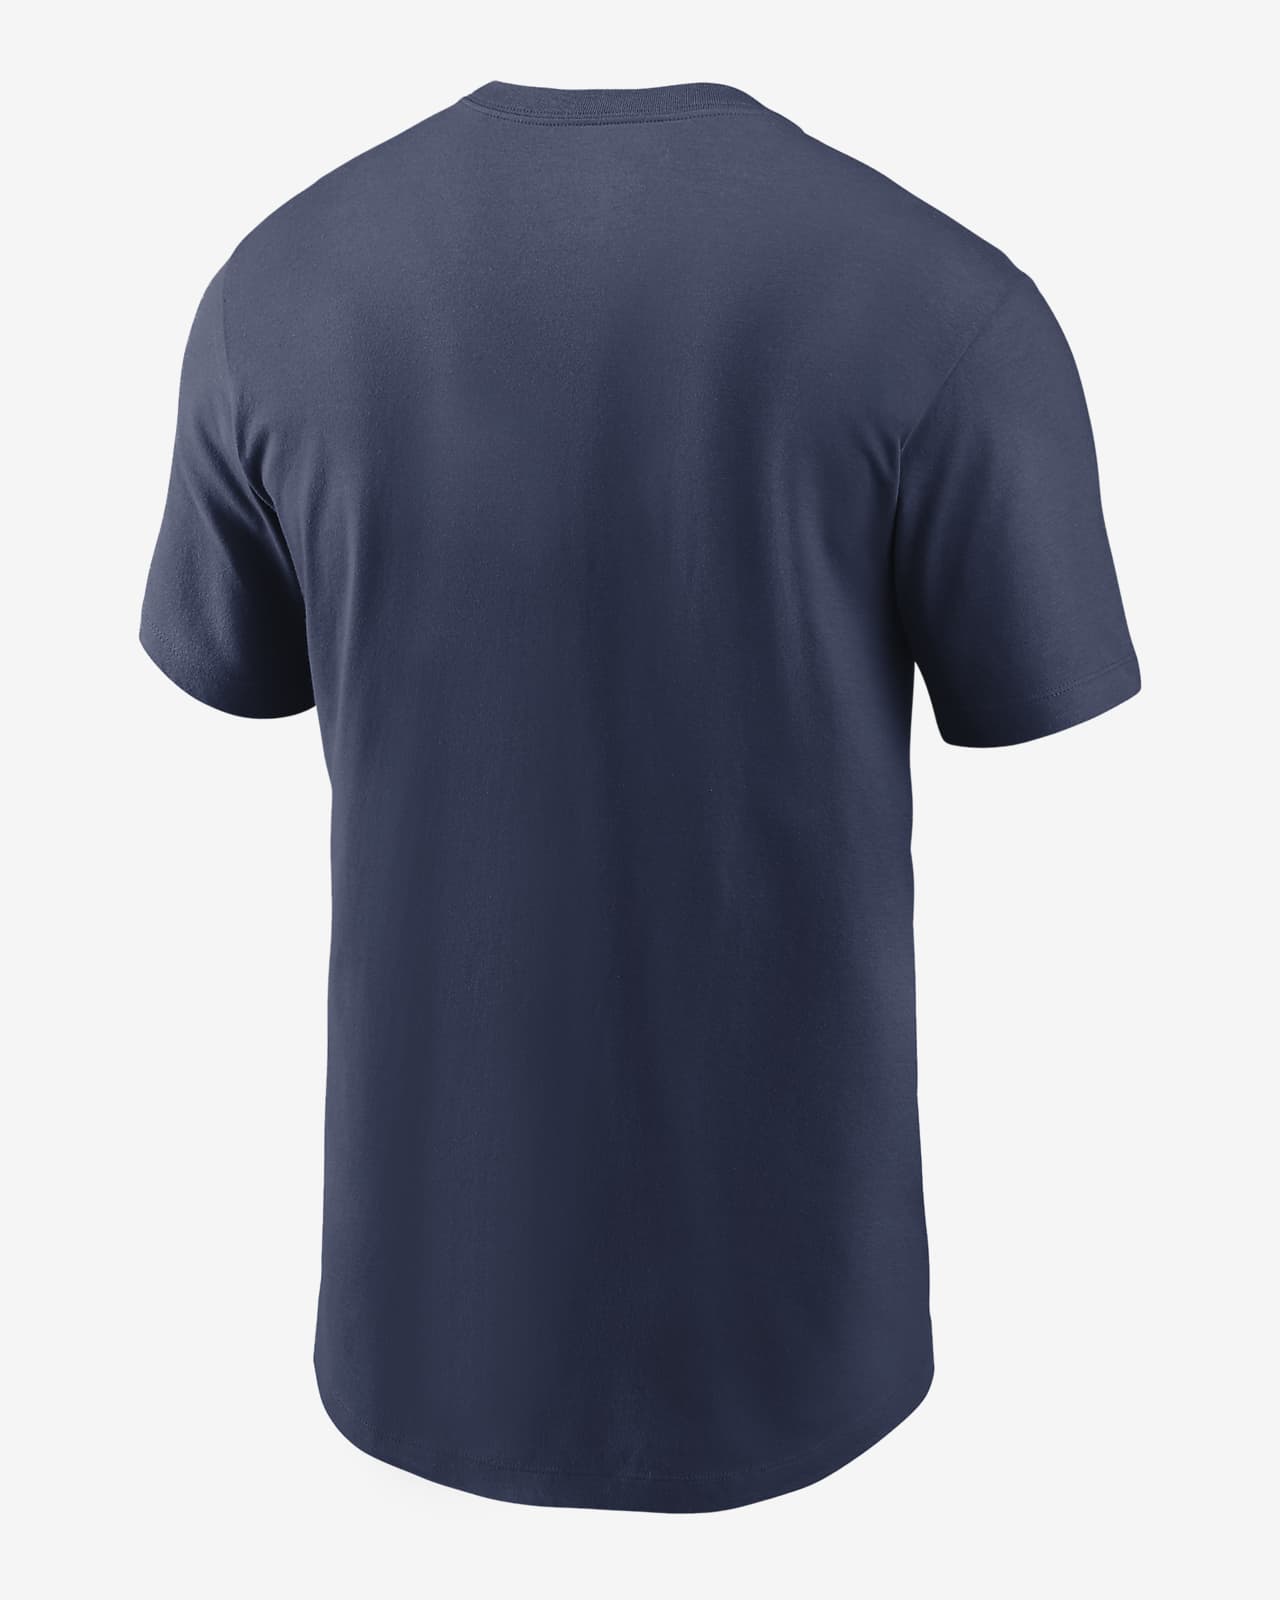 Nike Men's T-Shirt - Navy - XXL